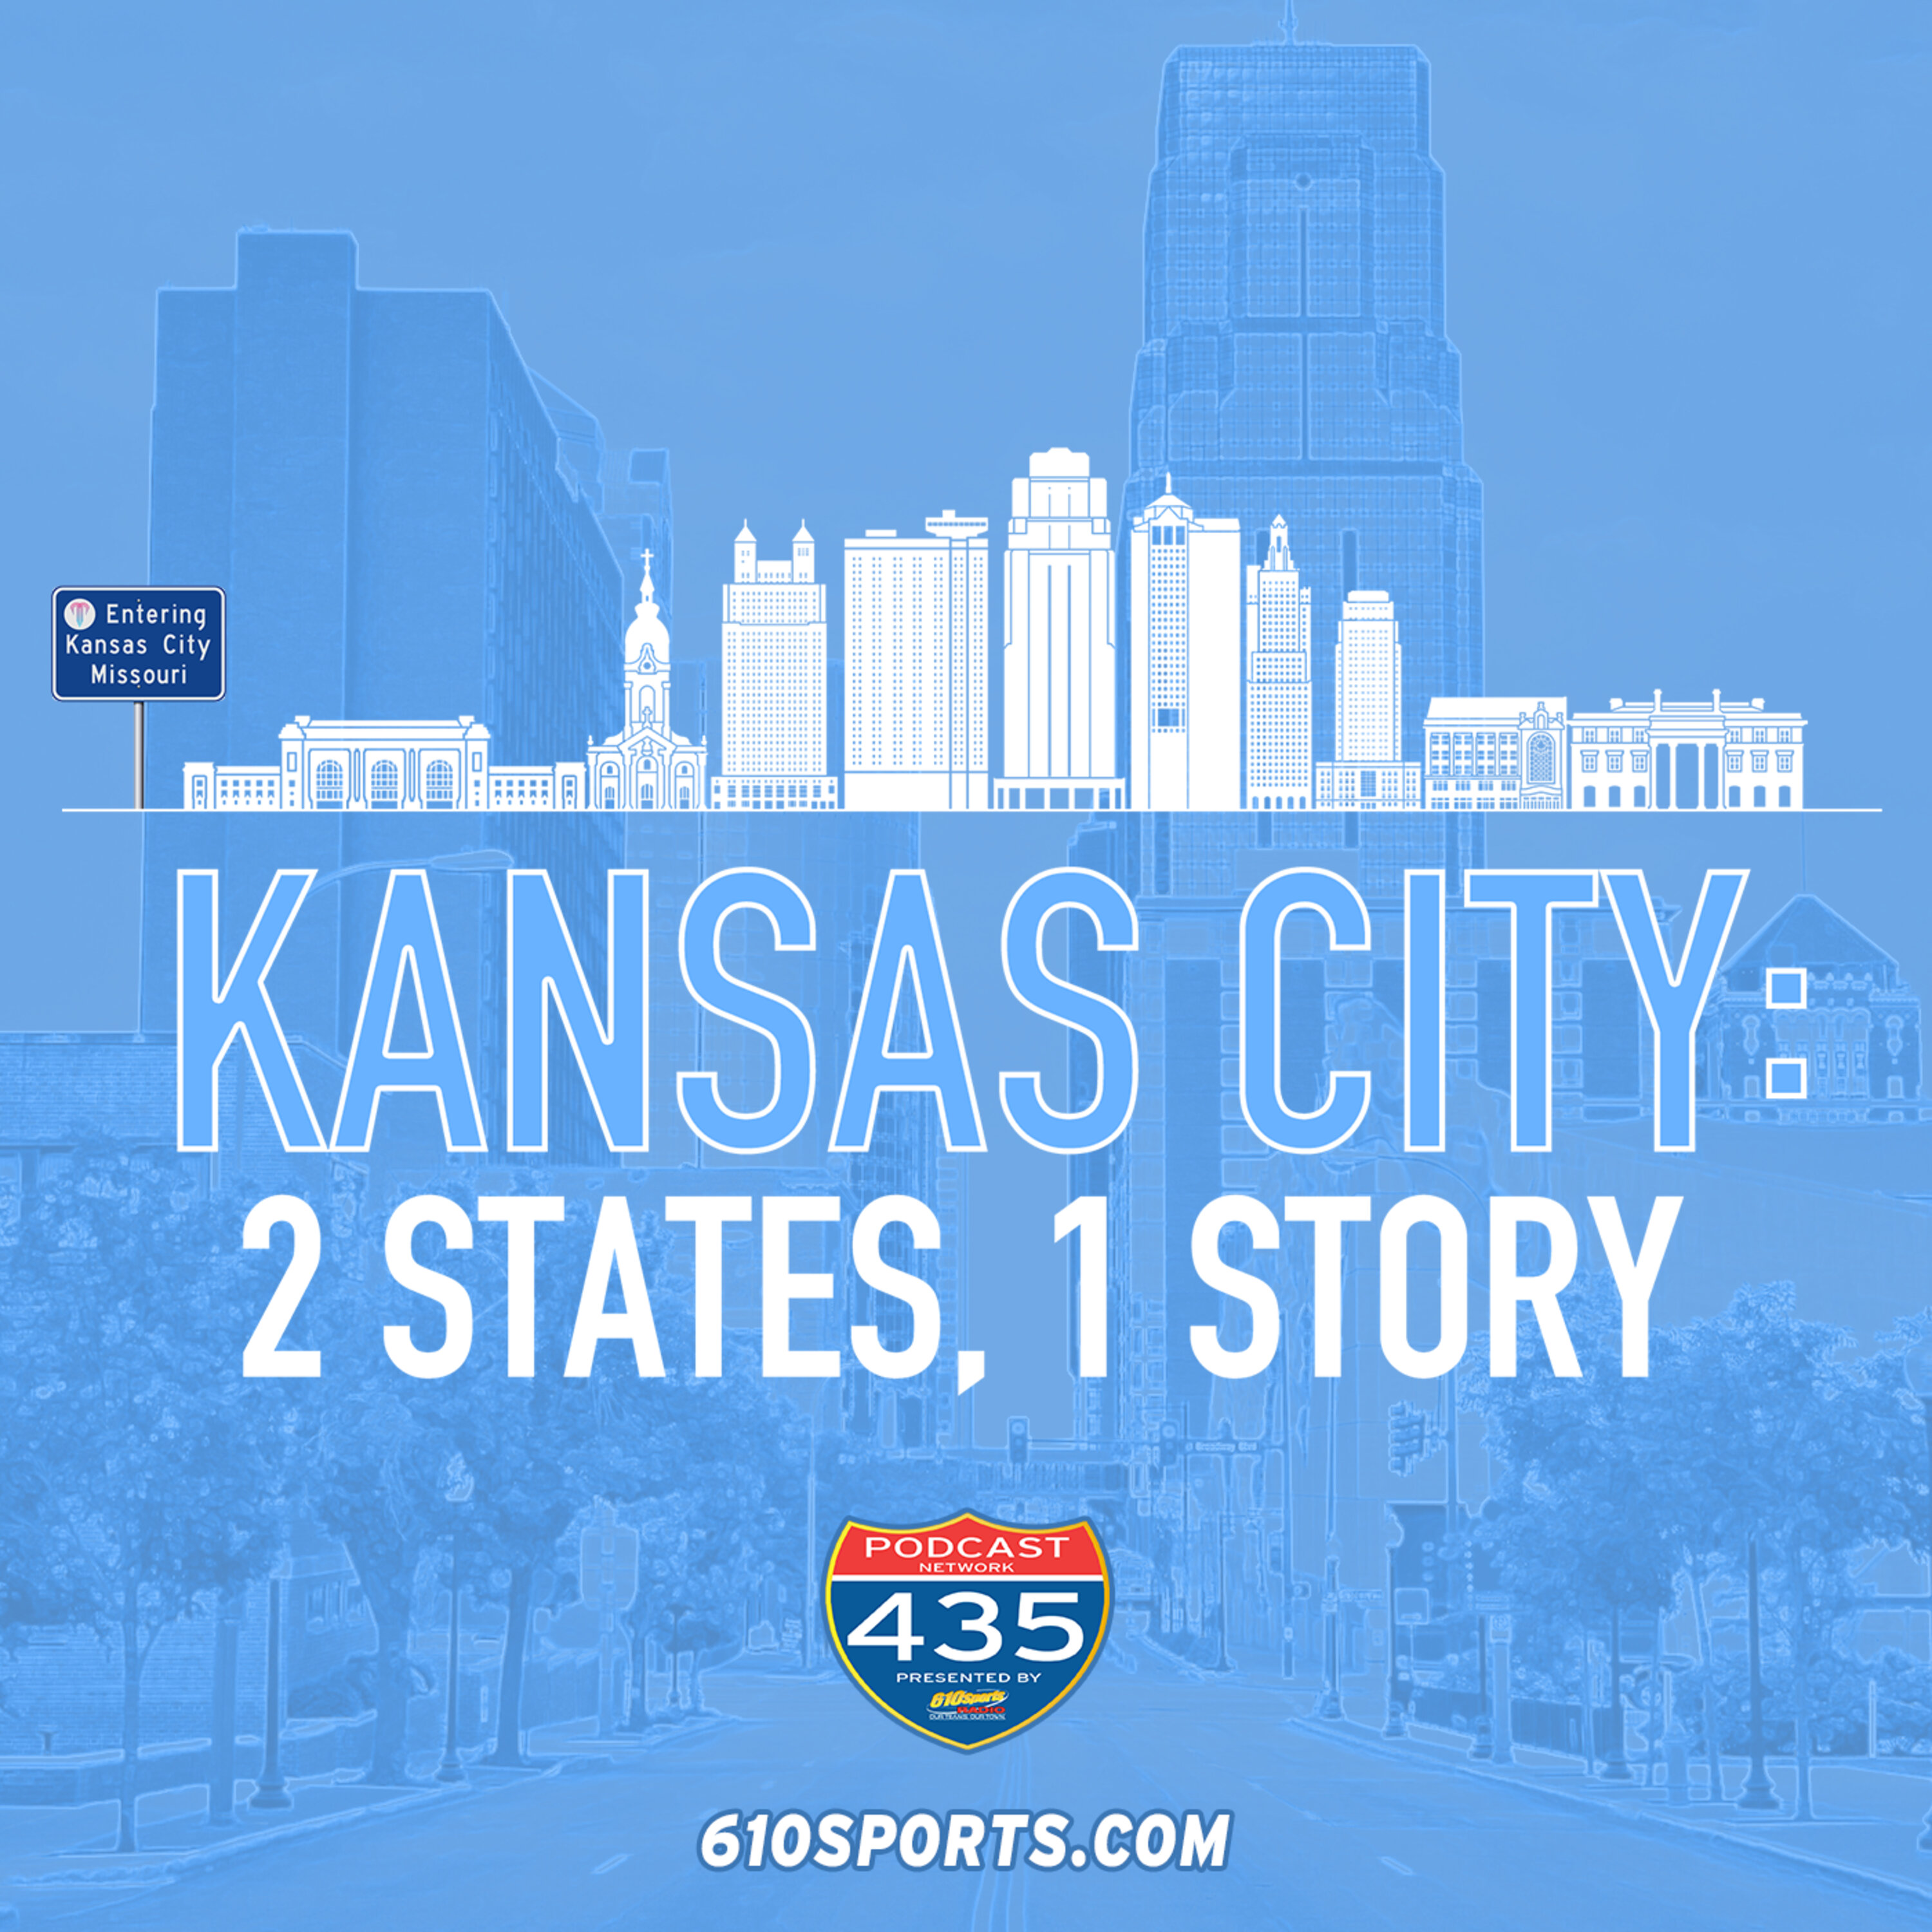 Kansas City:  2 States, 1 Story